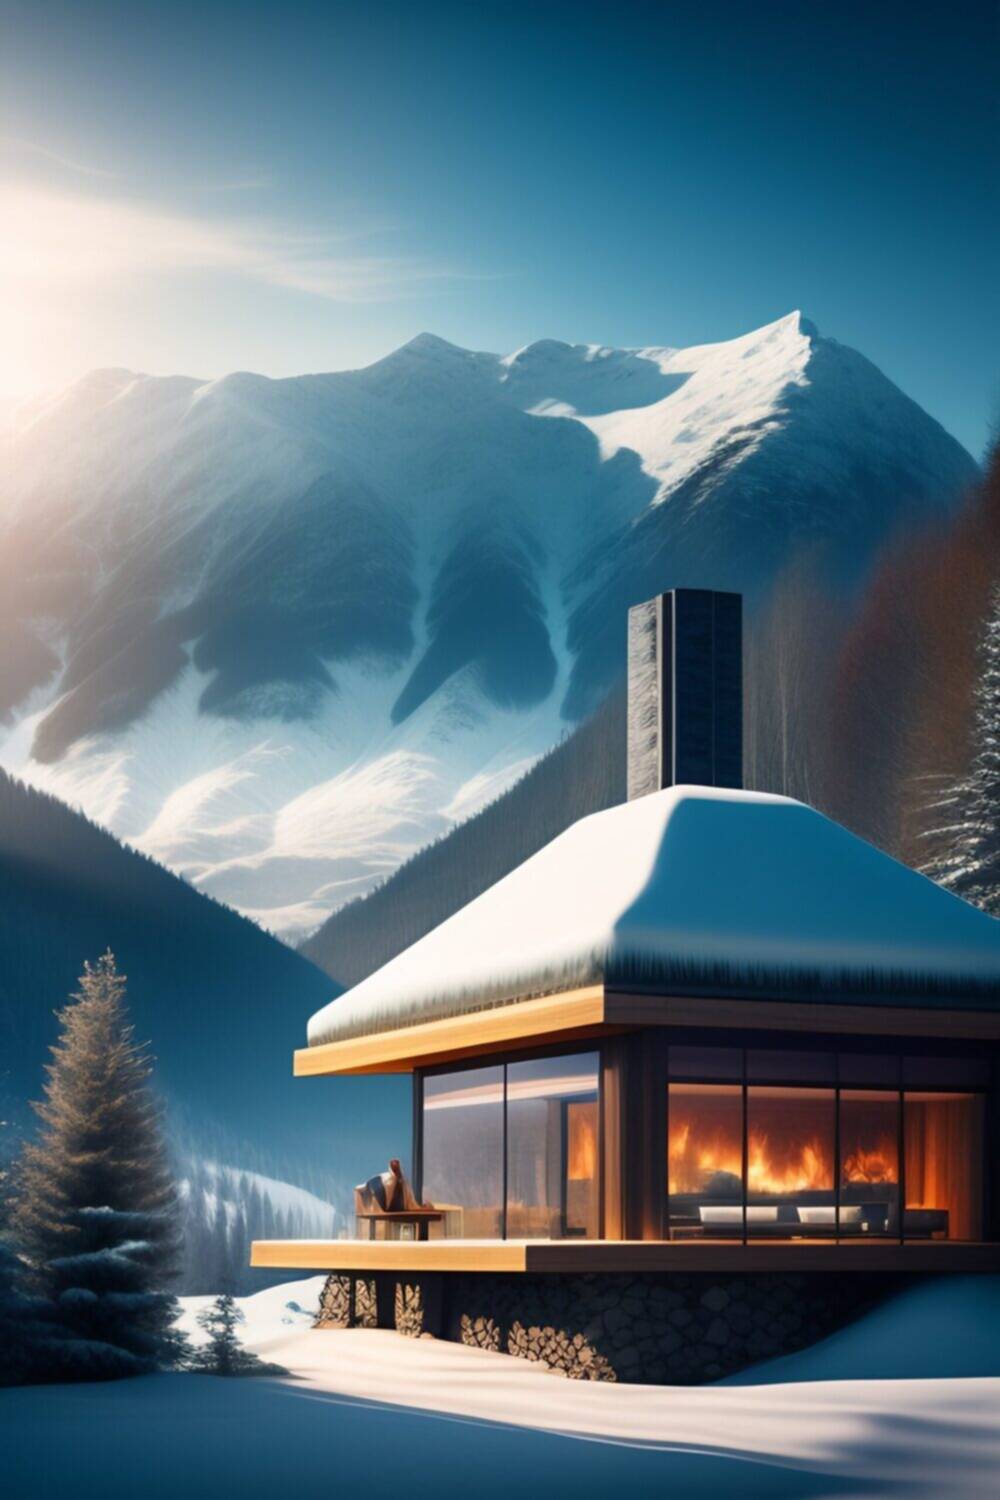 The Best Ski Resorts to Visit in 2023